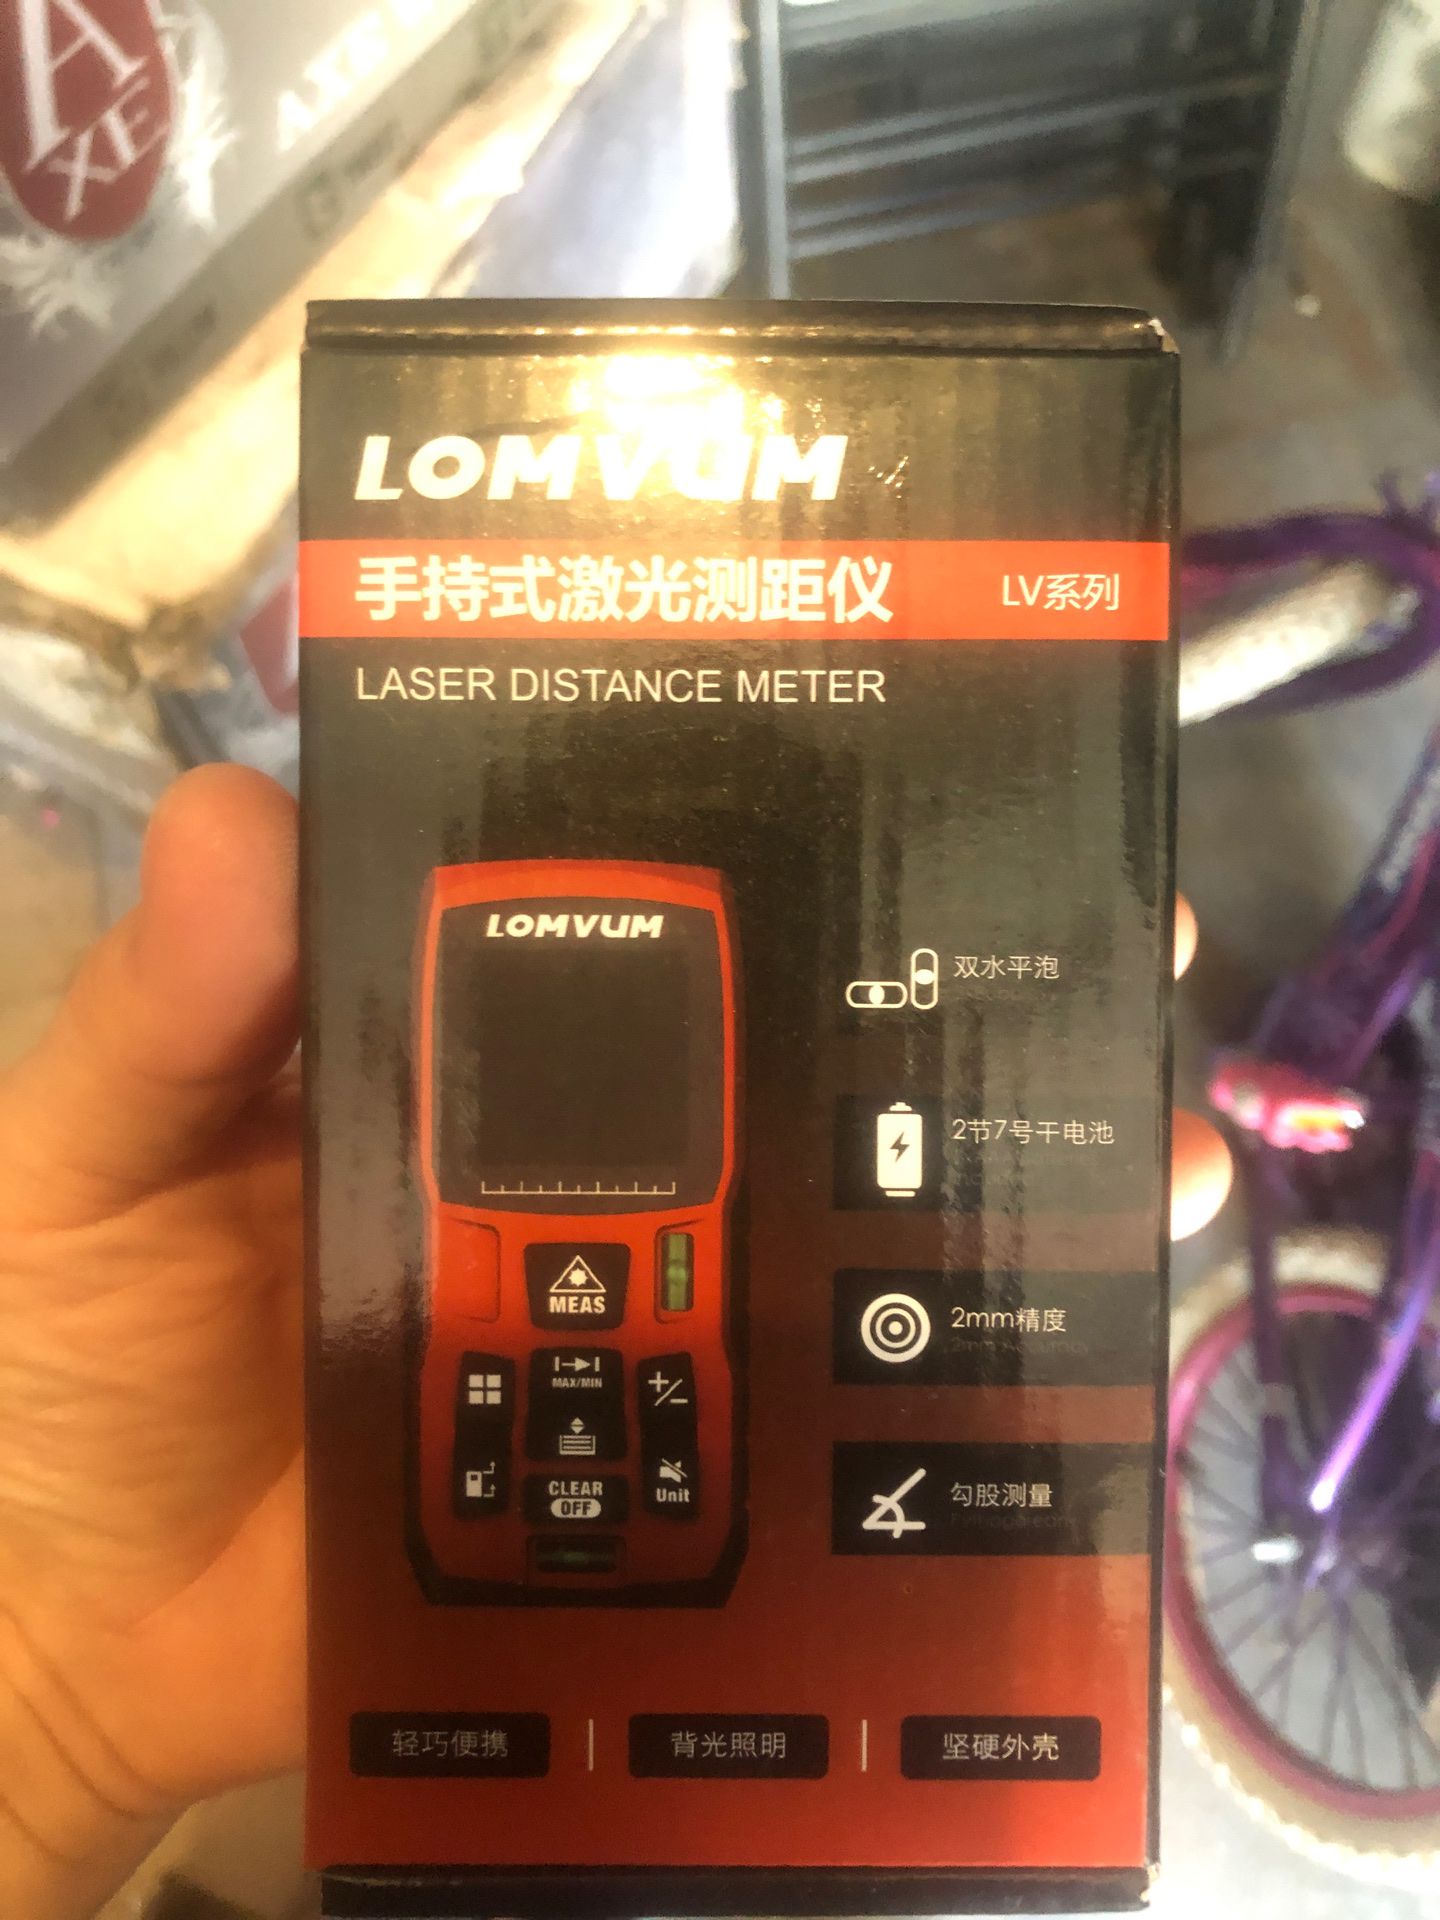 Laser distance meter